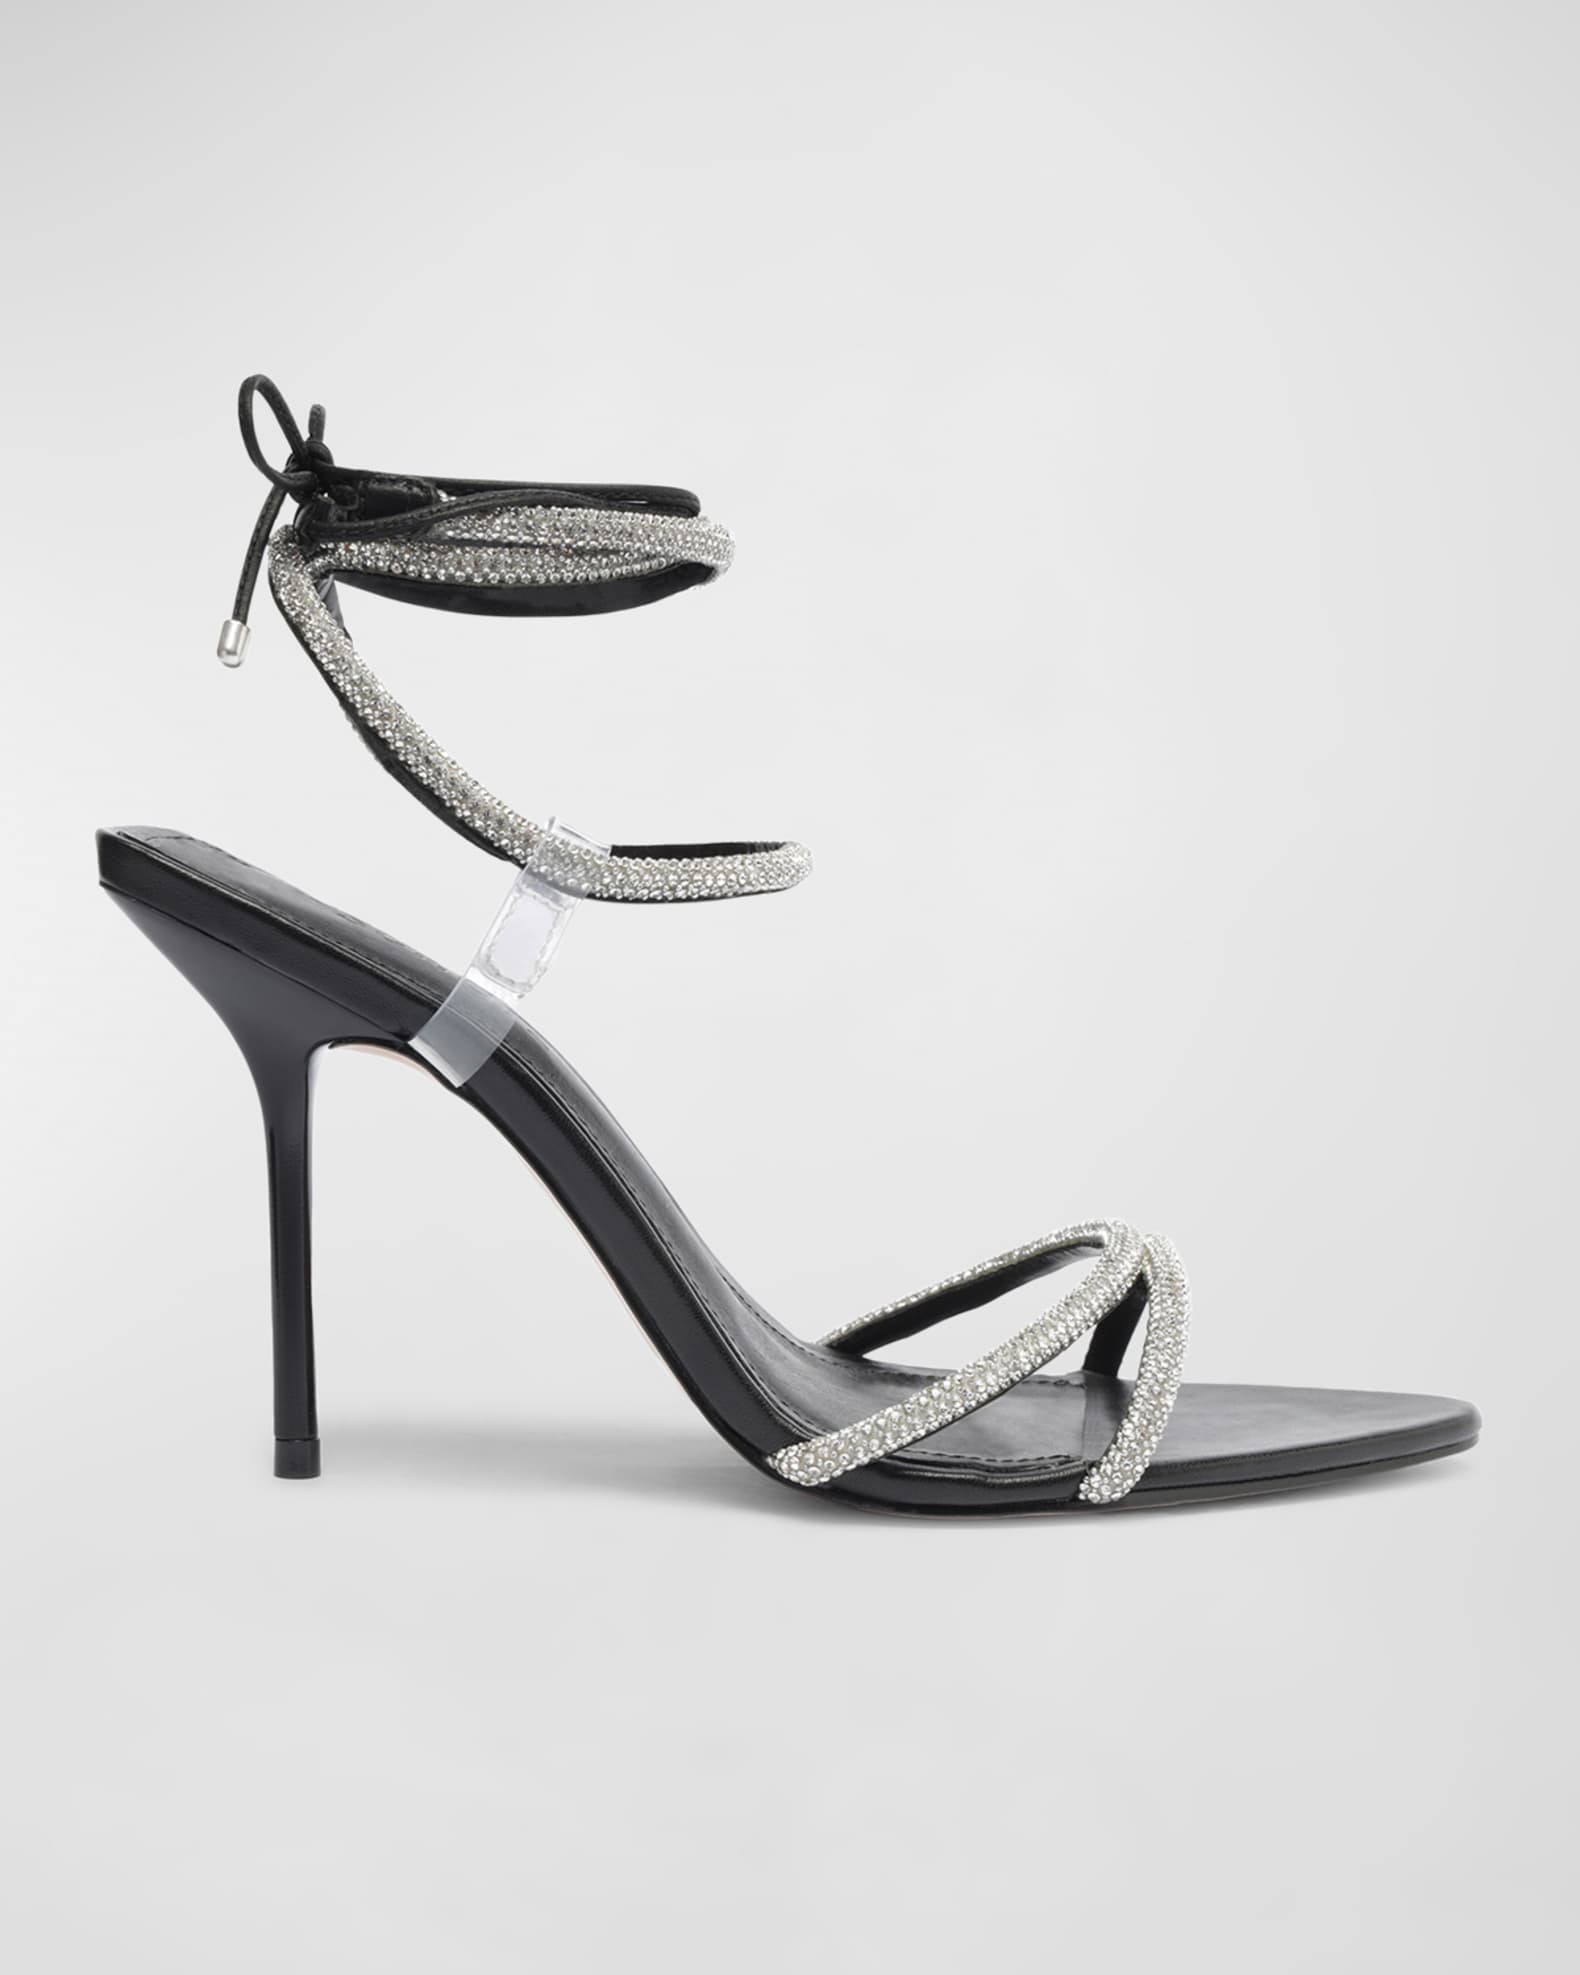 Schutz Gio Crystal-Embellished Ankle-Tie Sandals | Neiman Marcus